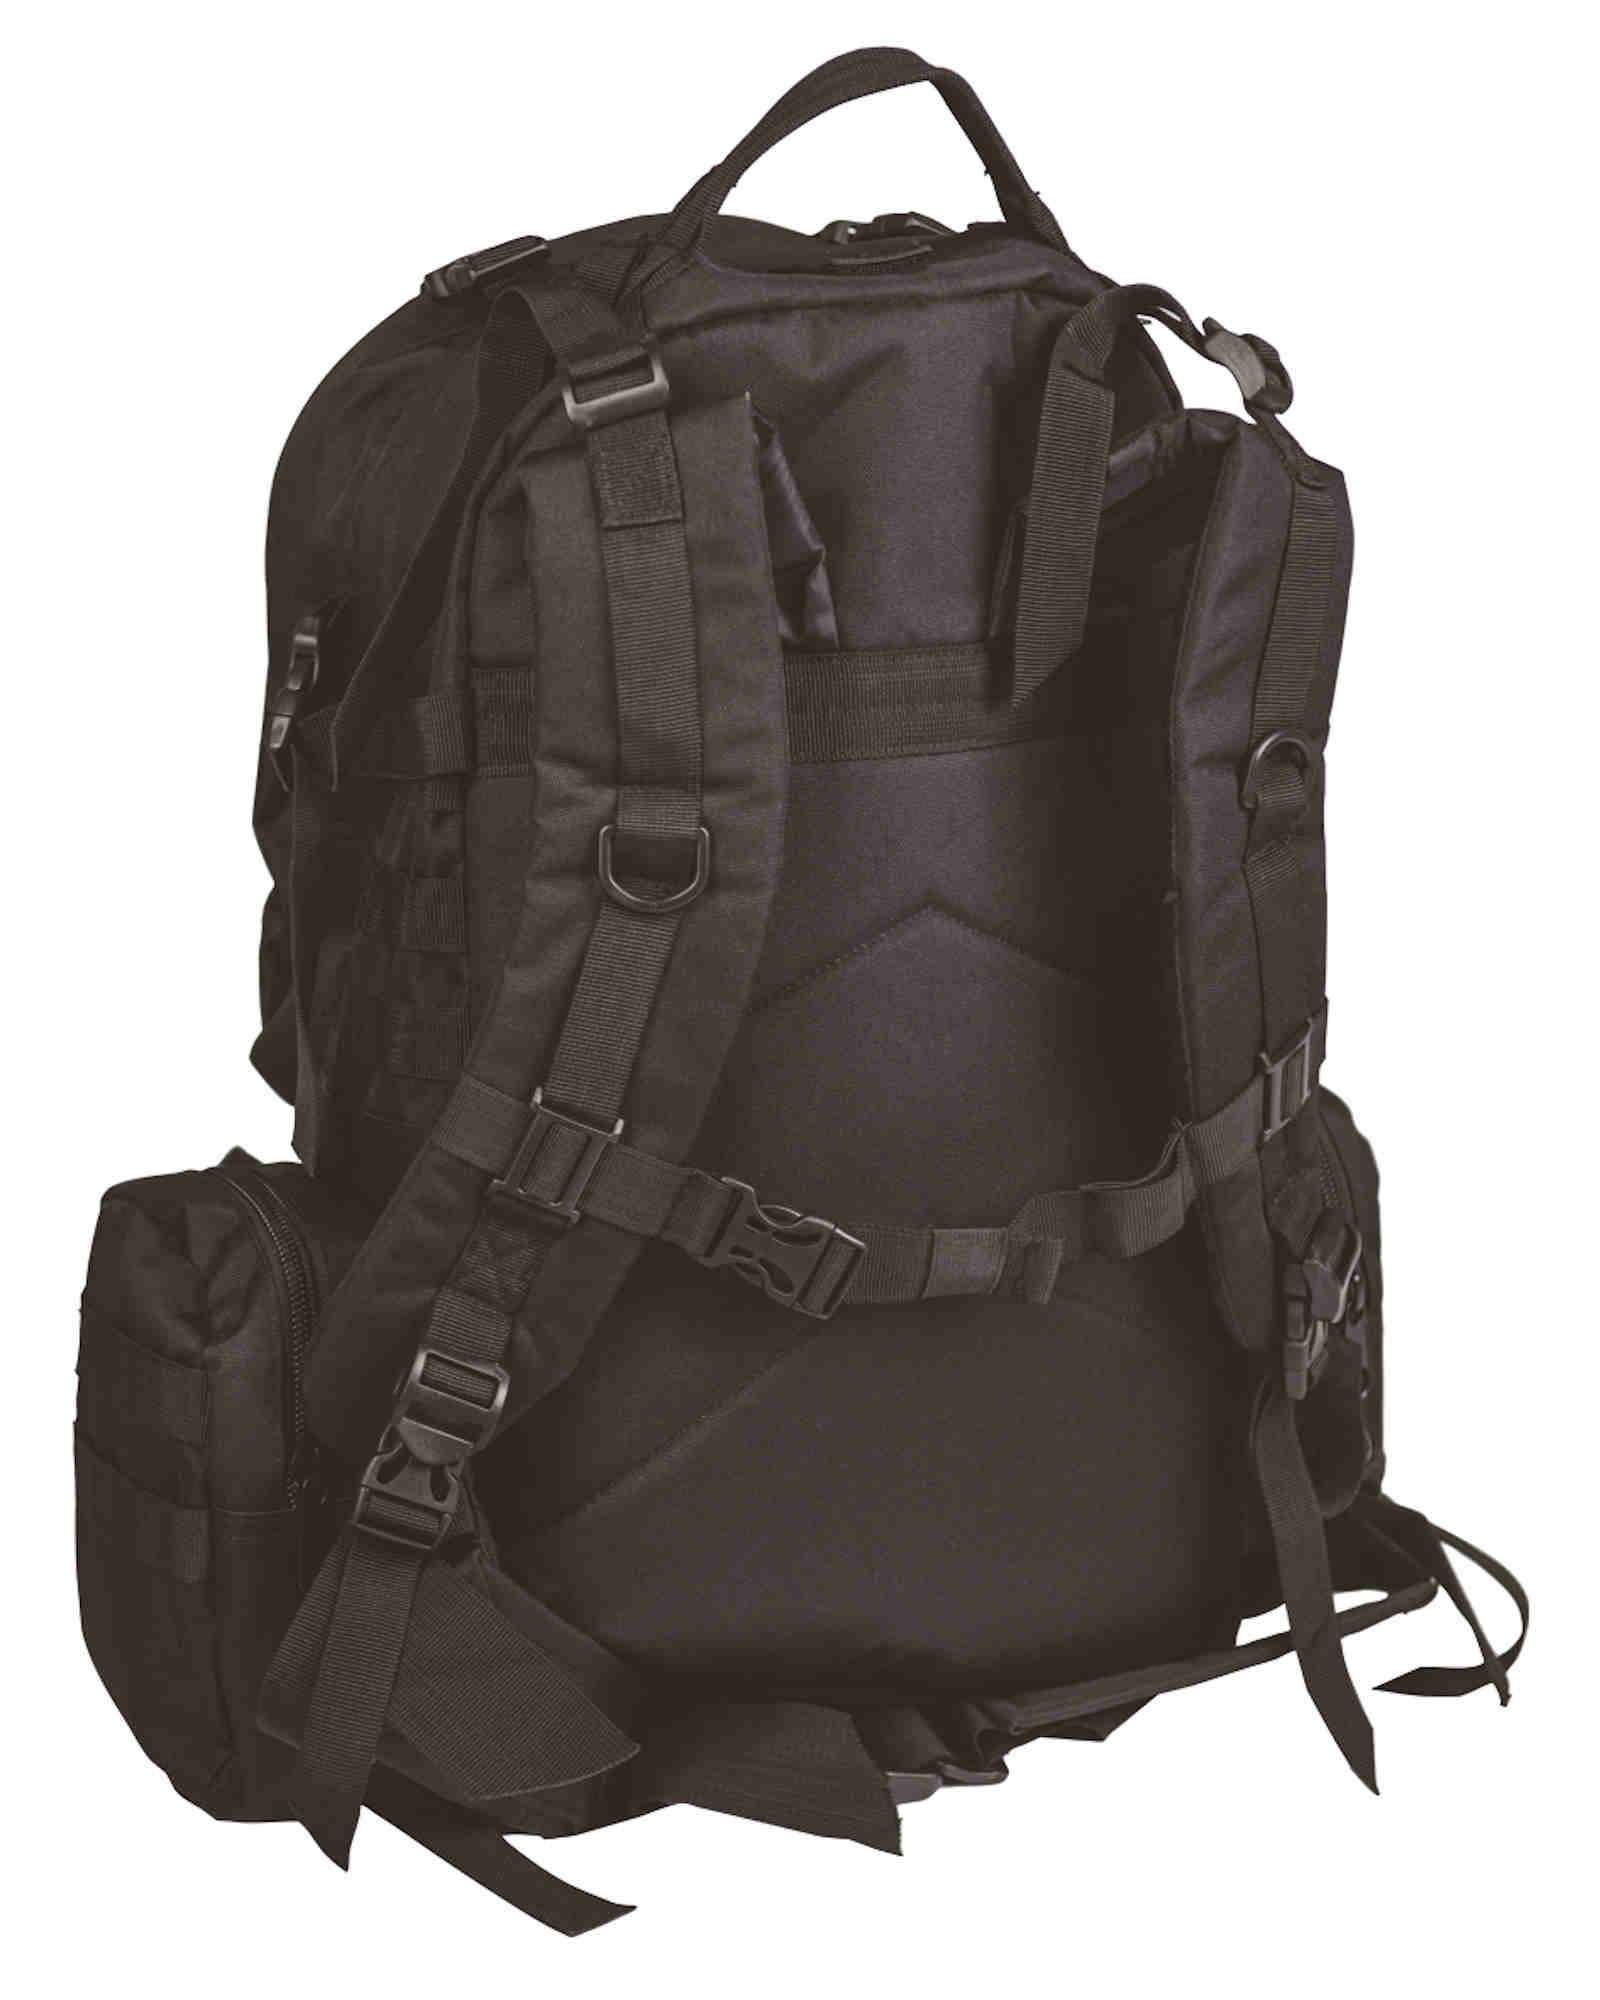 Mil-Tec Defence Pack Assambly Rucksack Trekkingrucksack Wanderrucksack Backpack